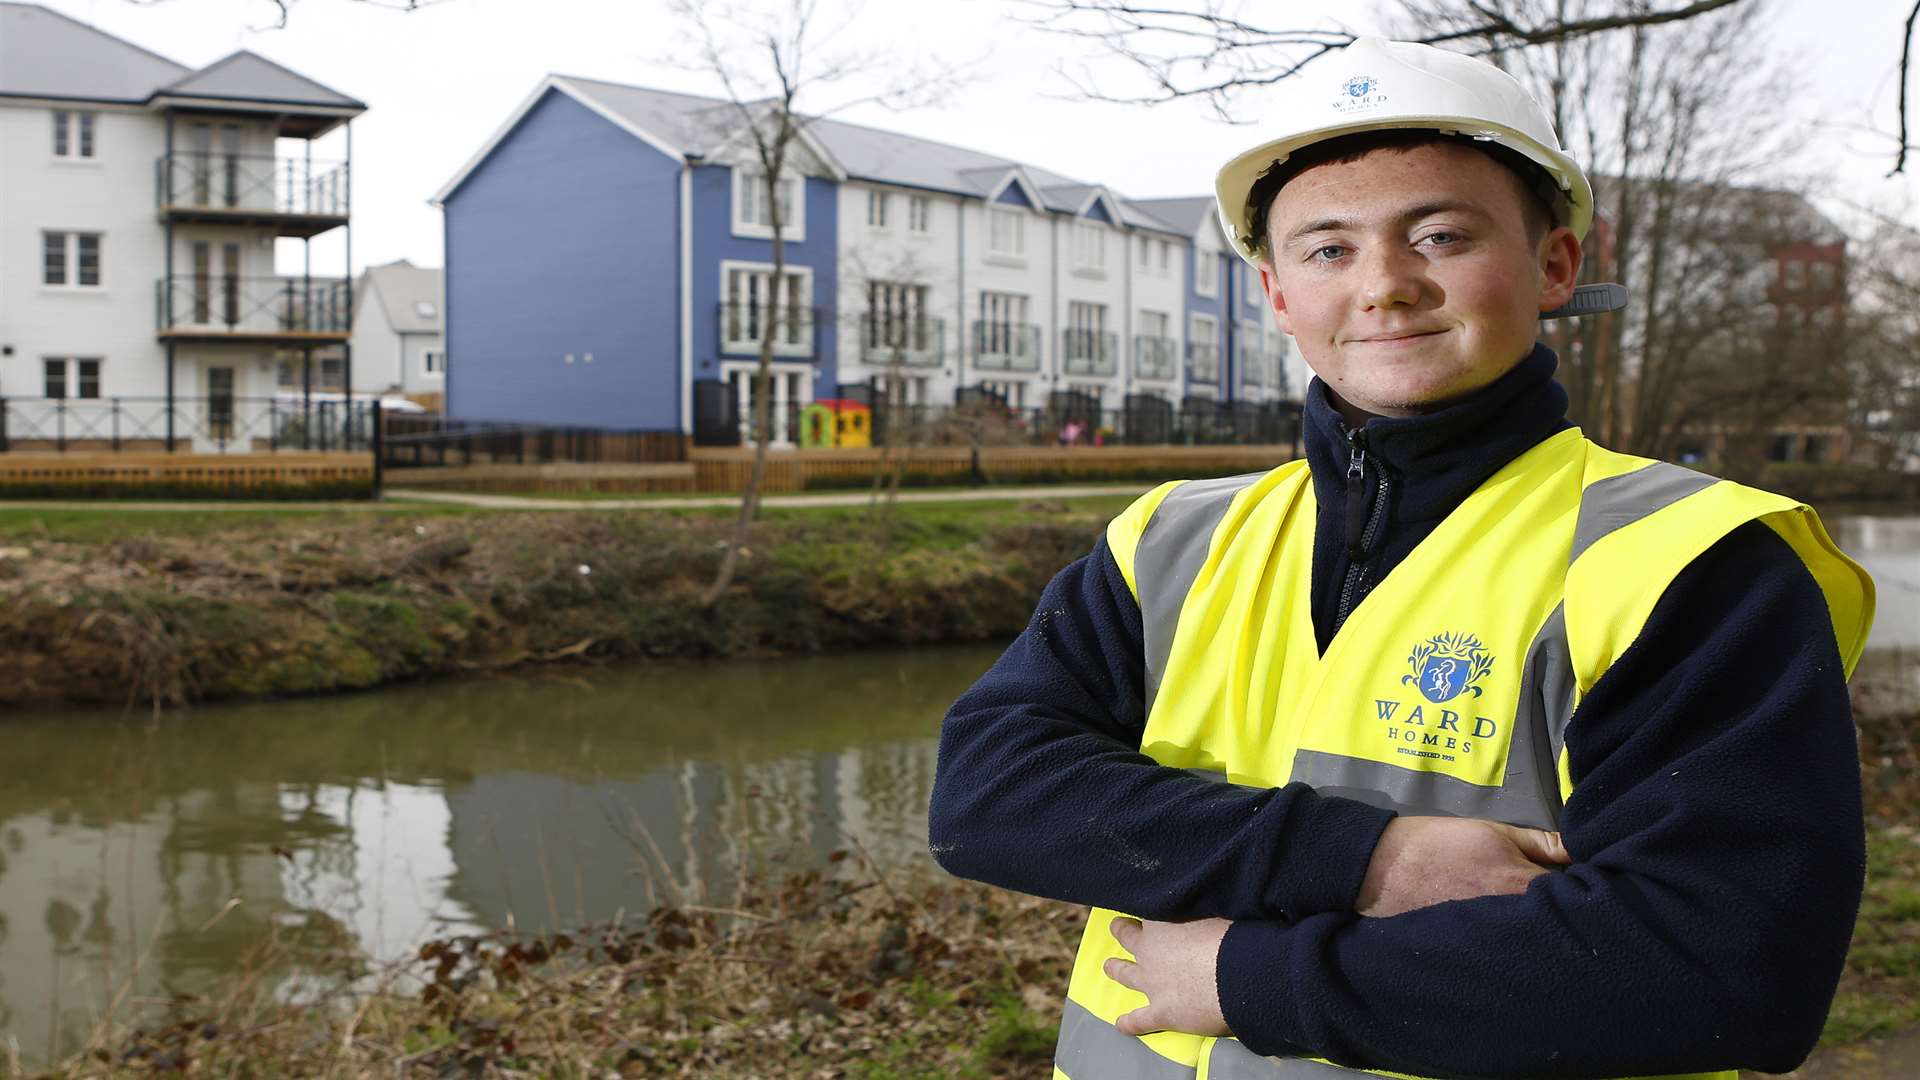 Ward Homes apprentice of the year Ben Quickenden